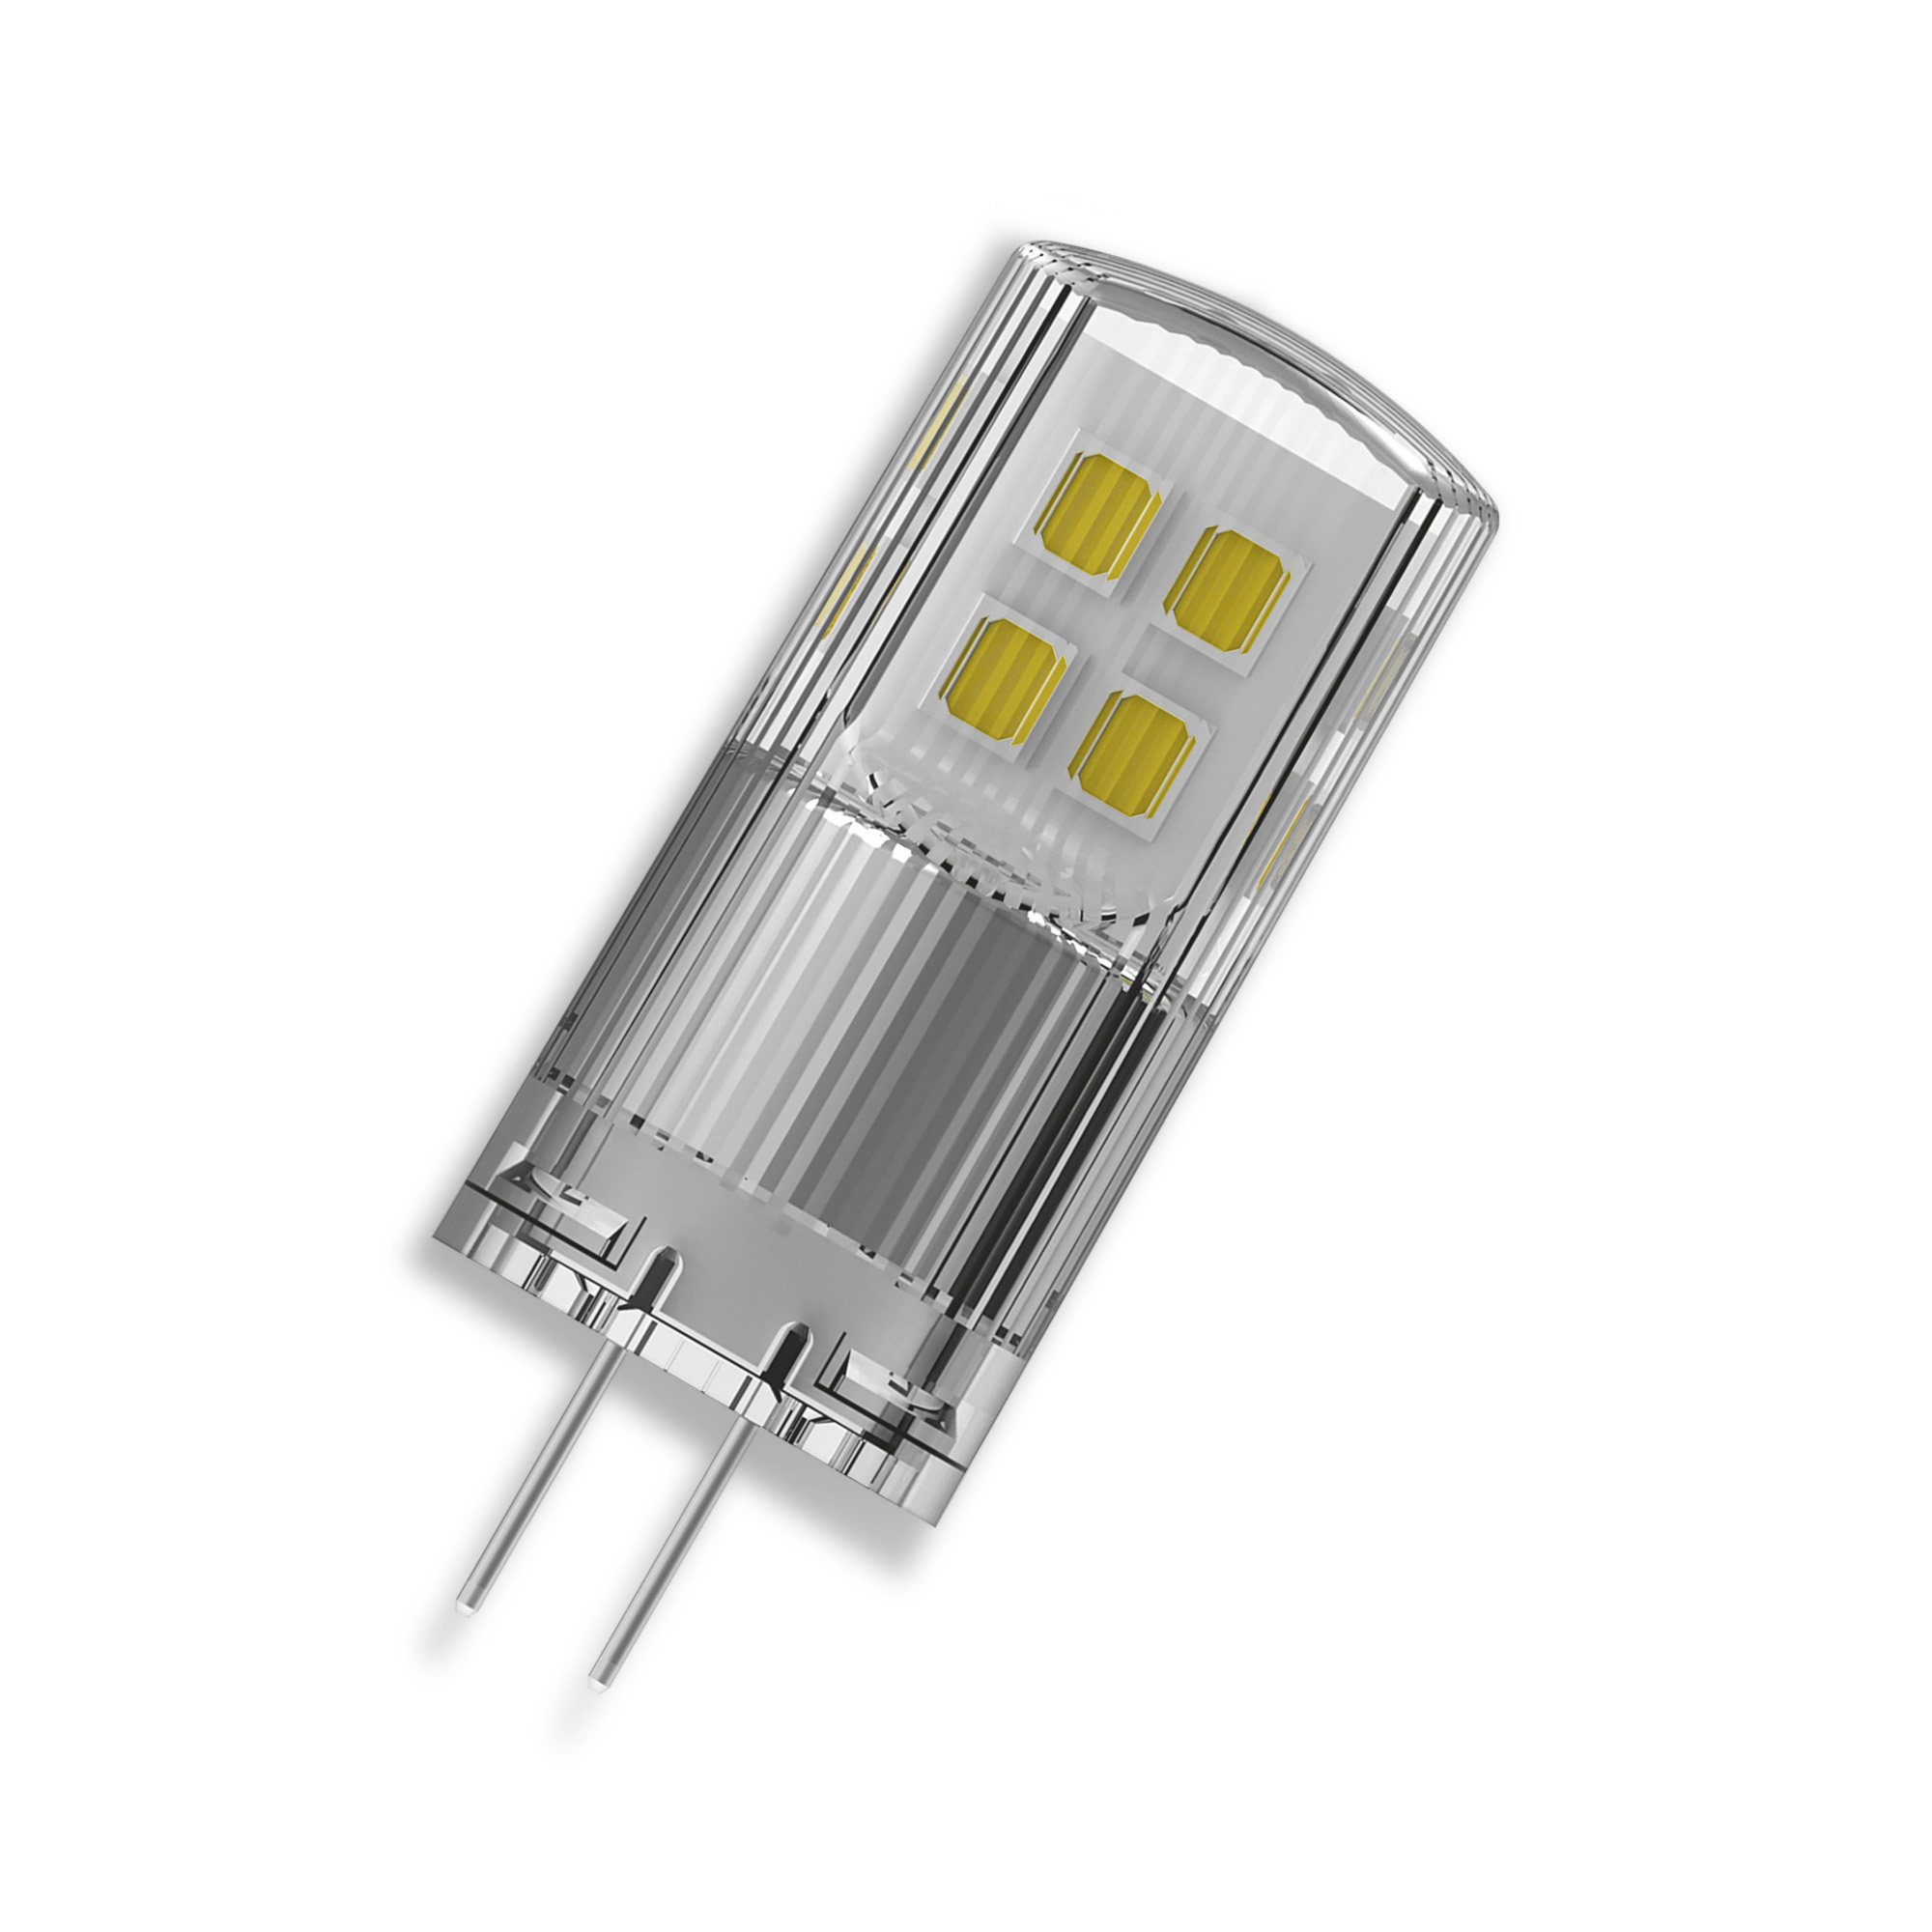 Osram LED SUPERSTAR PIN 20 DIM clear 2W 827 G4 200lm 2700K